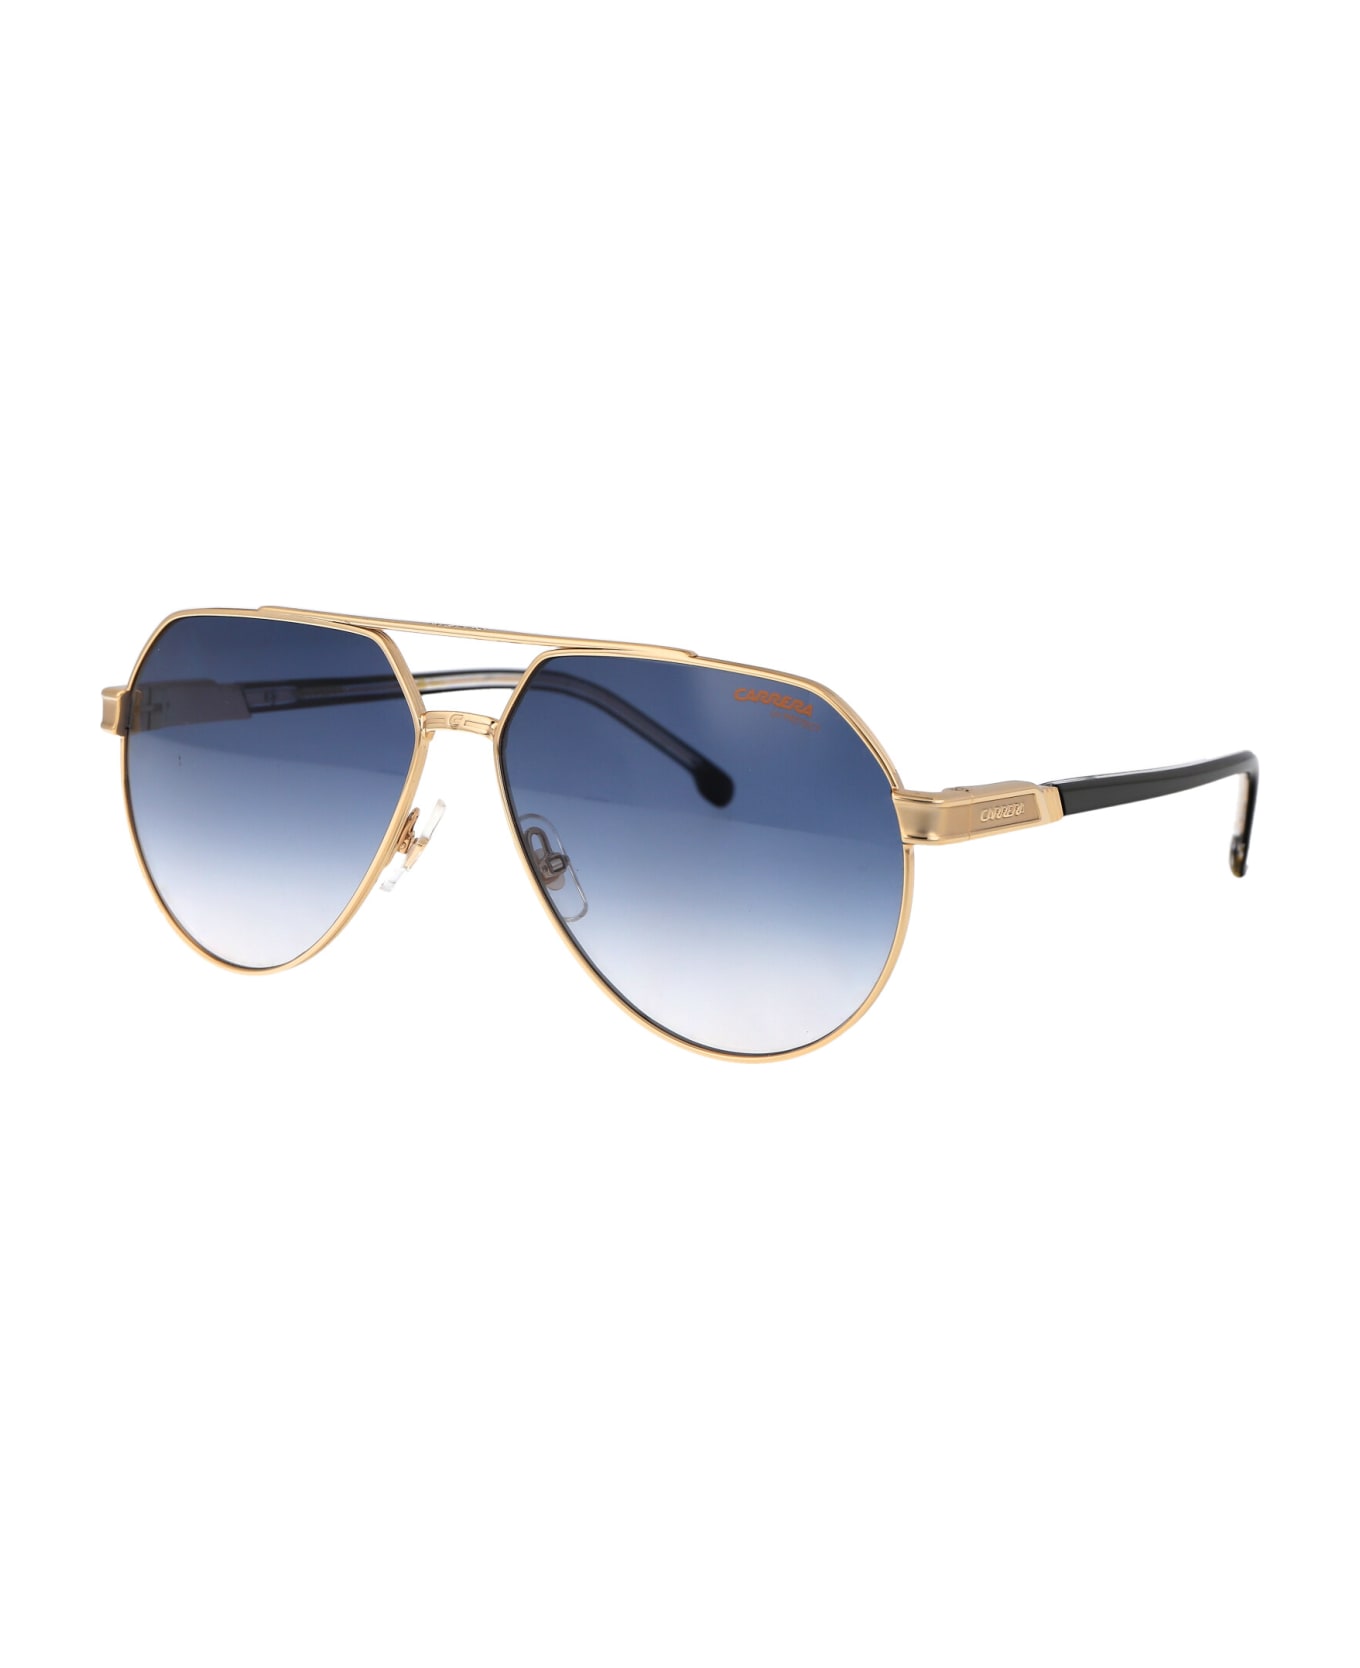 Carrera 1067/s Sunglasses - J5G08 GOLD サングラス